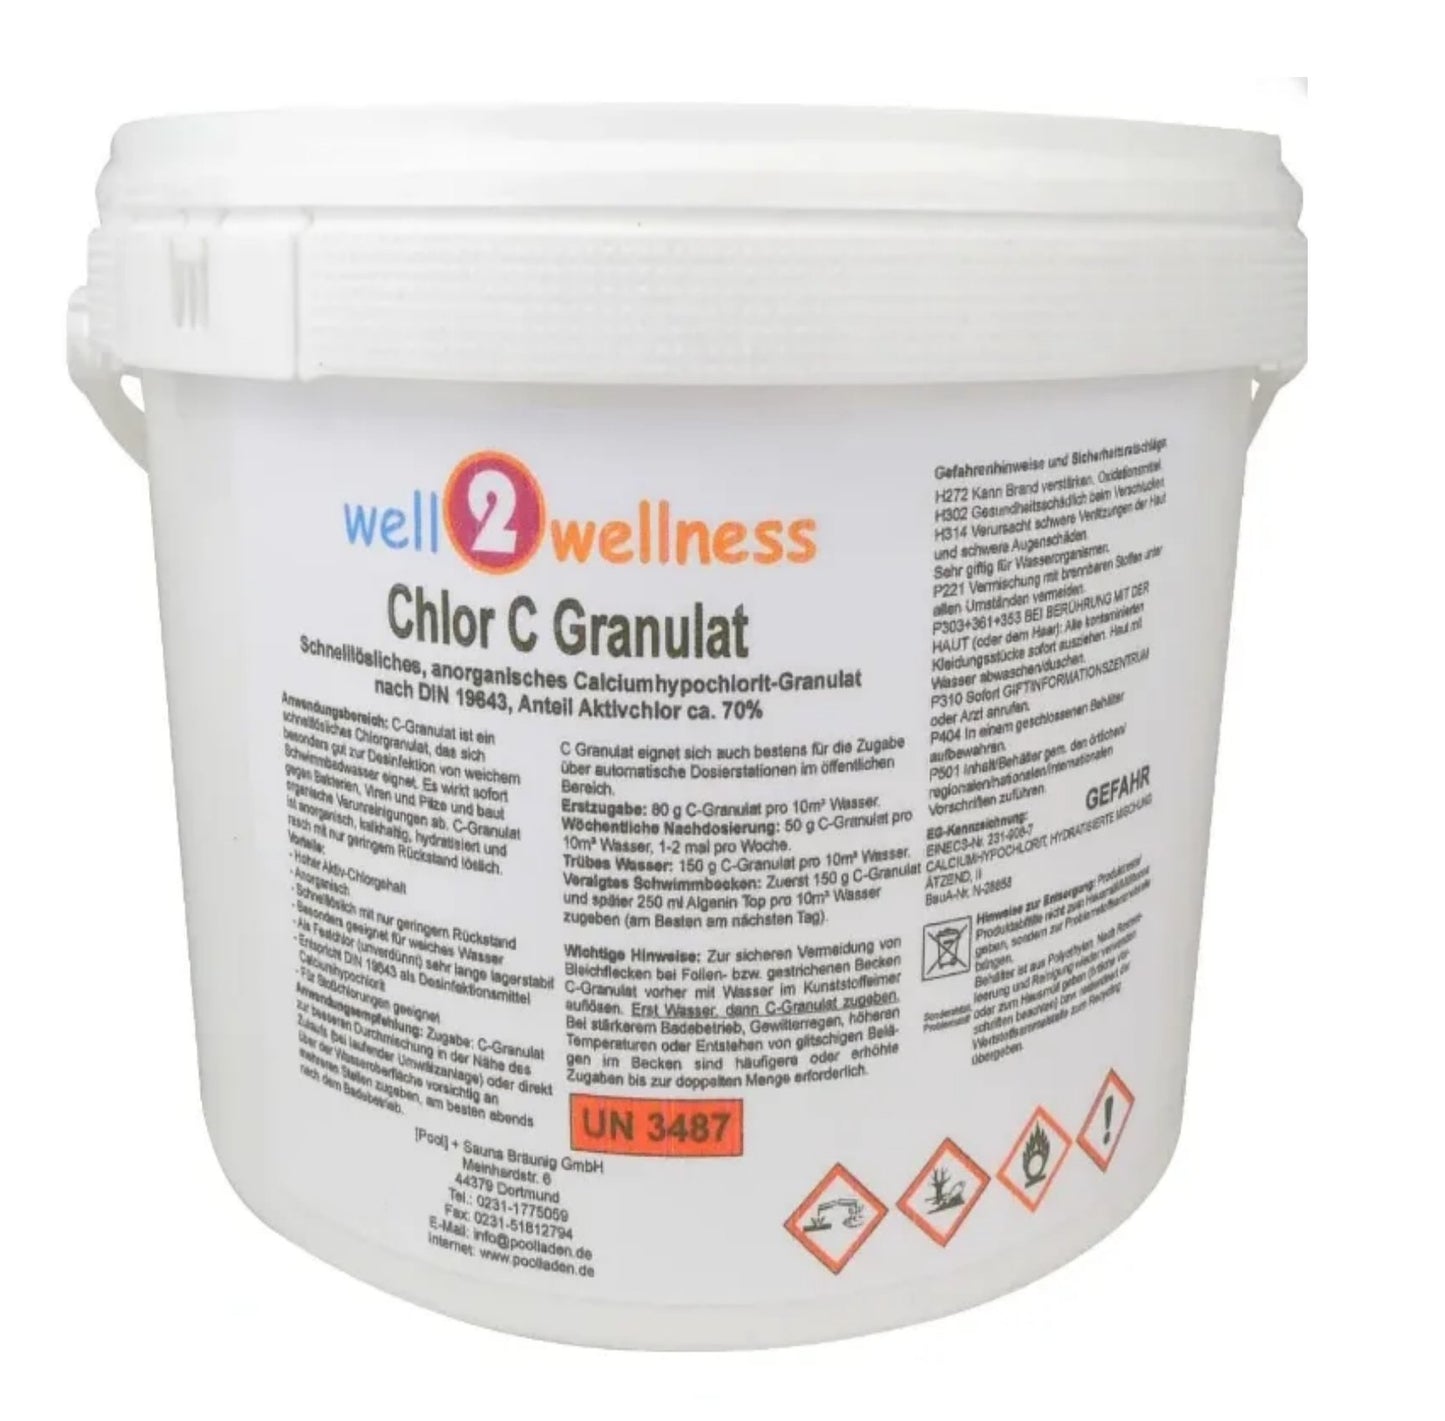 well2wellness® Chlor C Granulat - Calciumhypochlorit